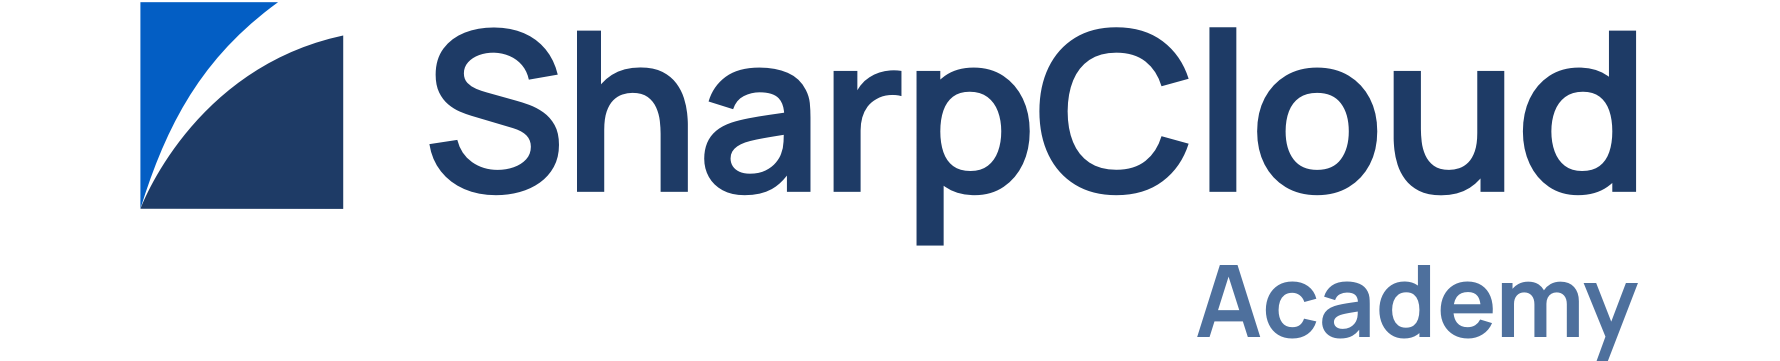 Sharpcloud Academy logo - Cropped